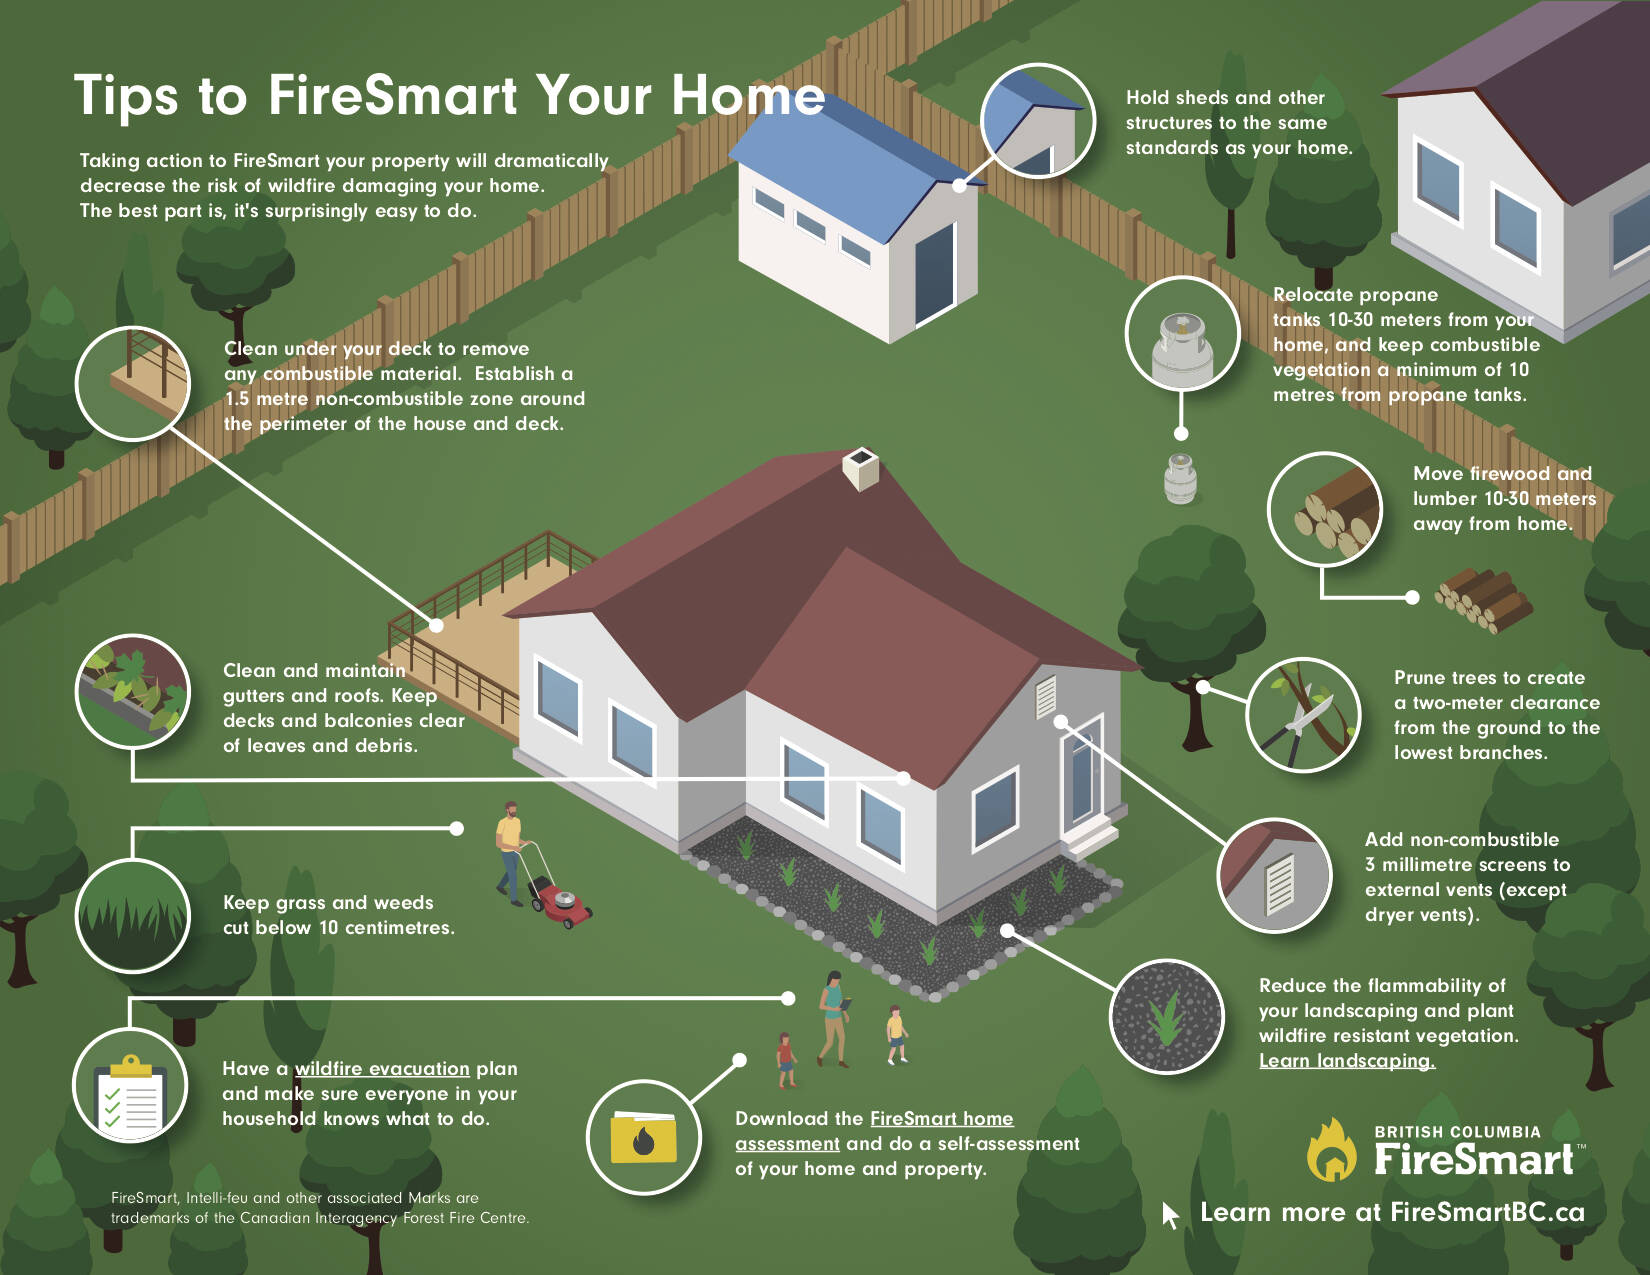 Tips to FireSmart your home. (FireSmartBC)